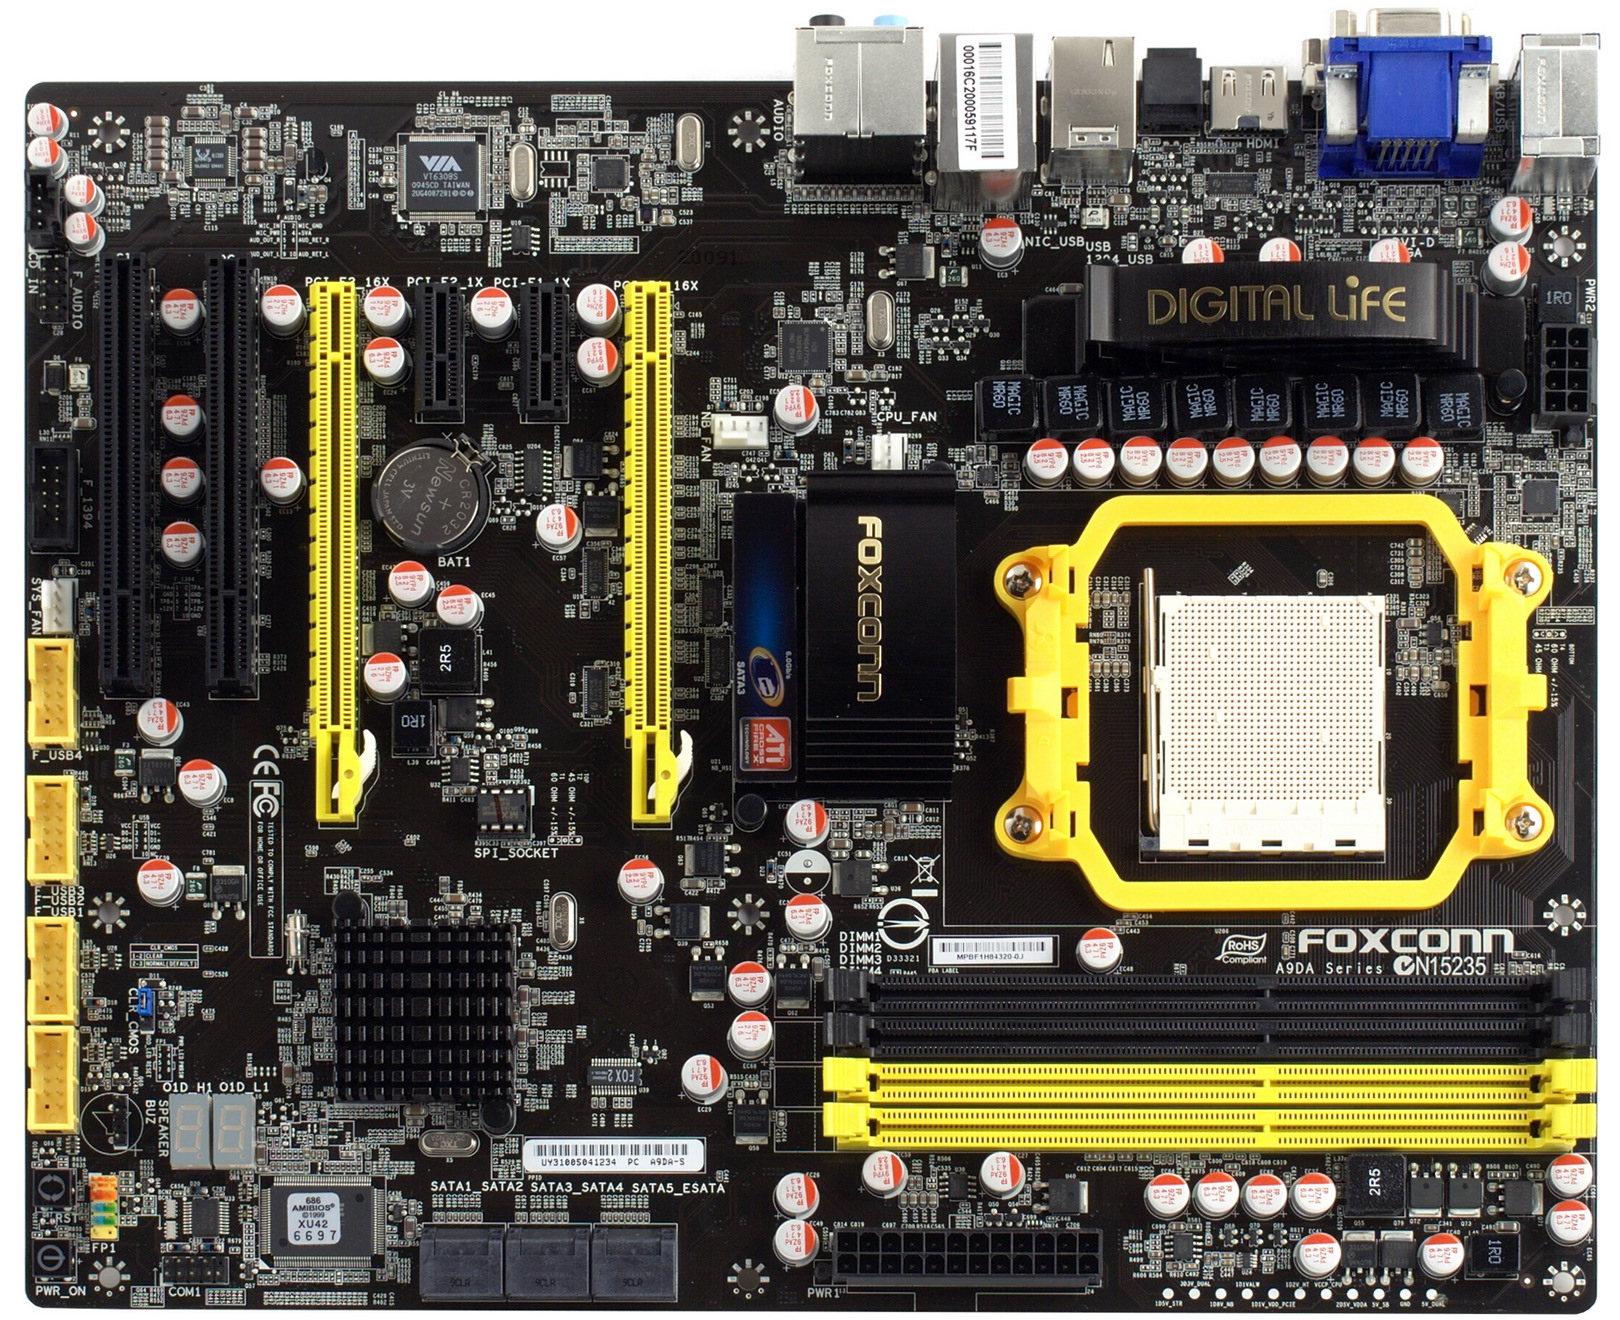 foxconn motherboard n15235